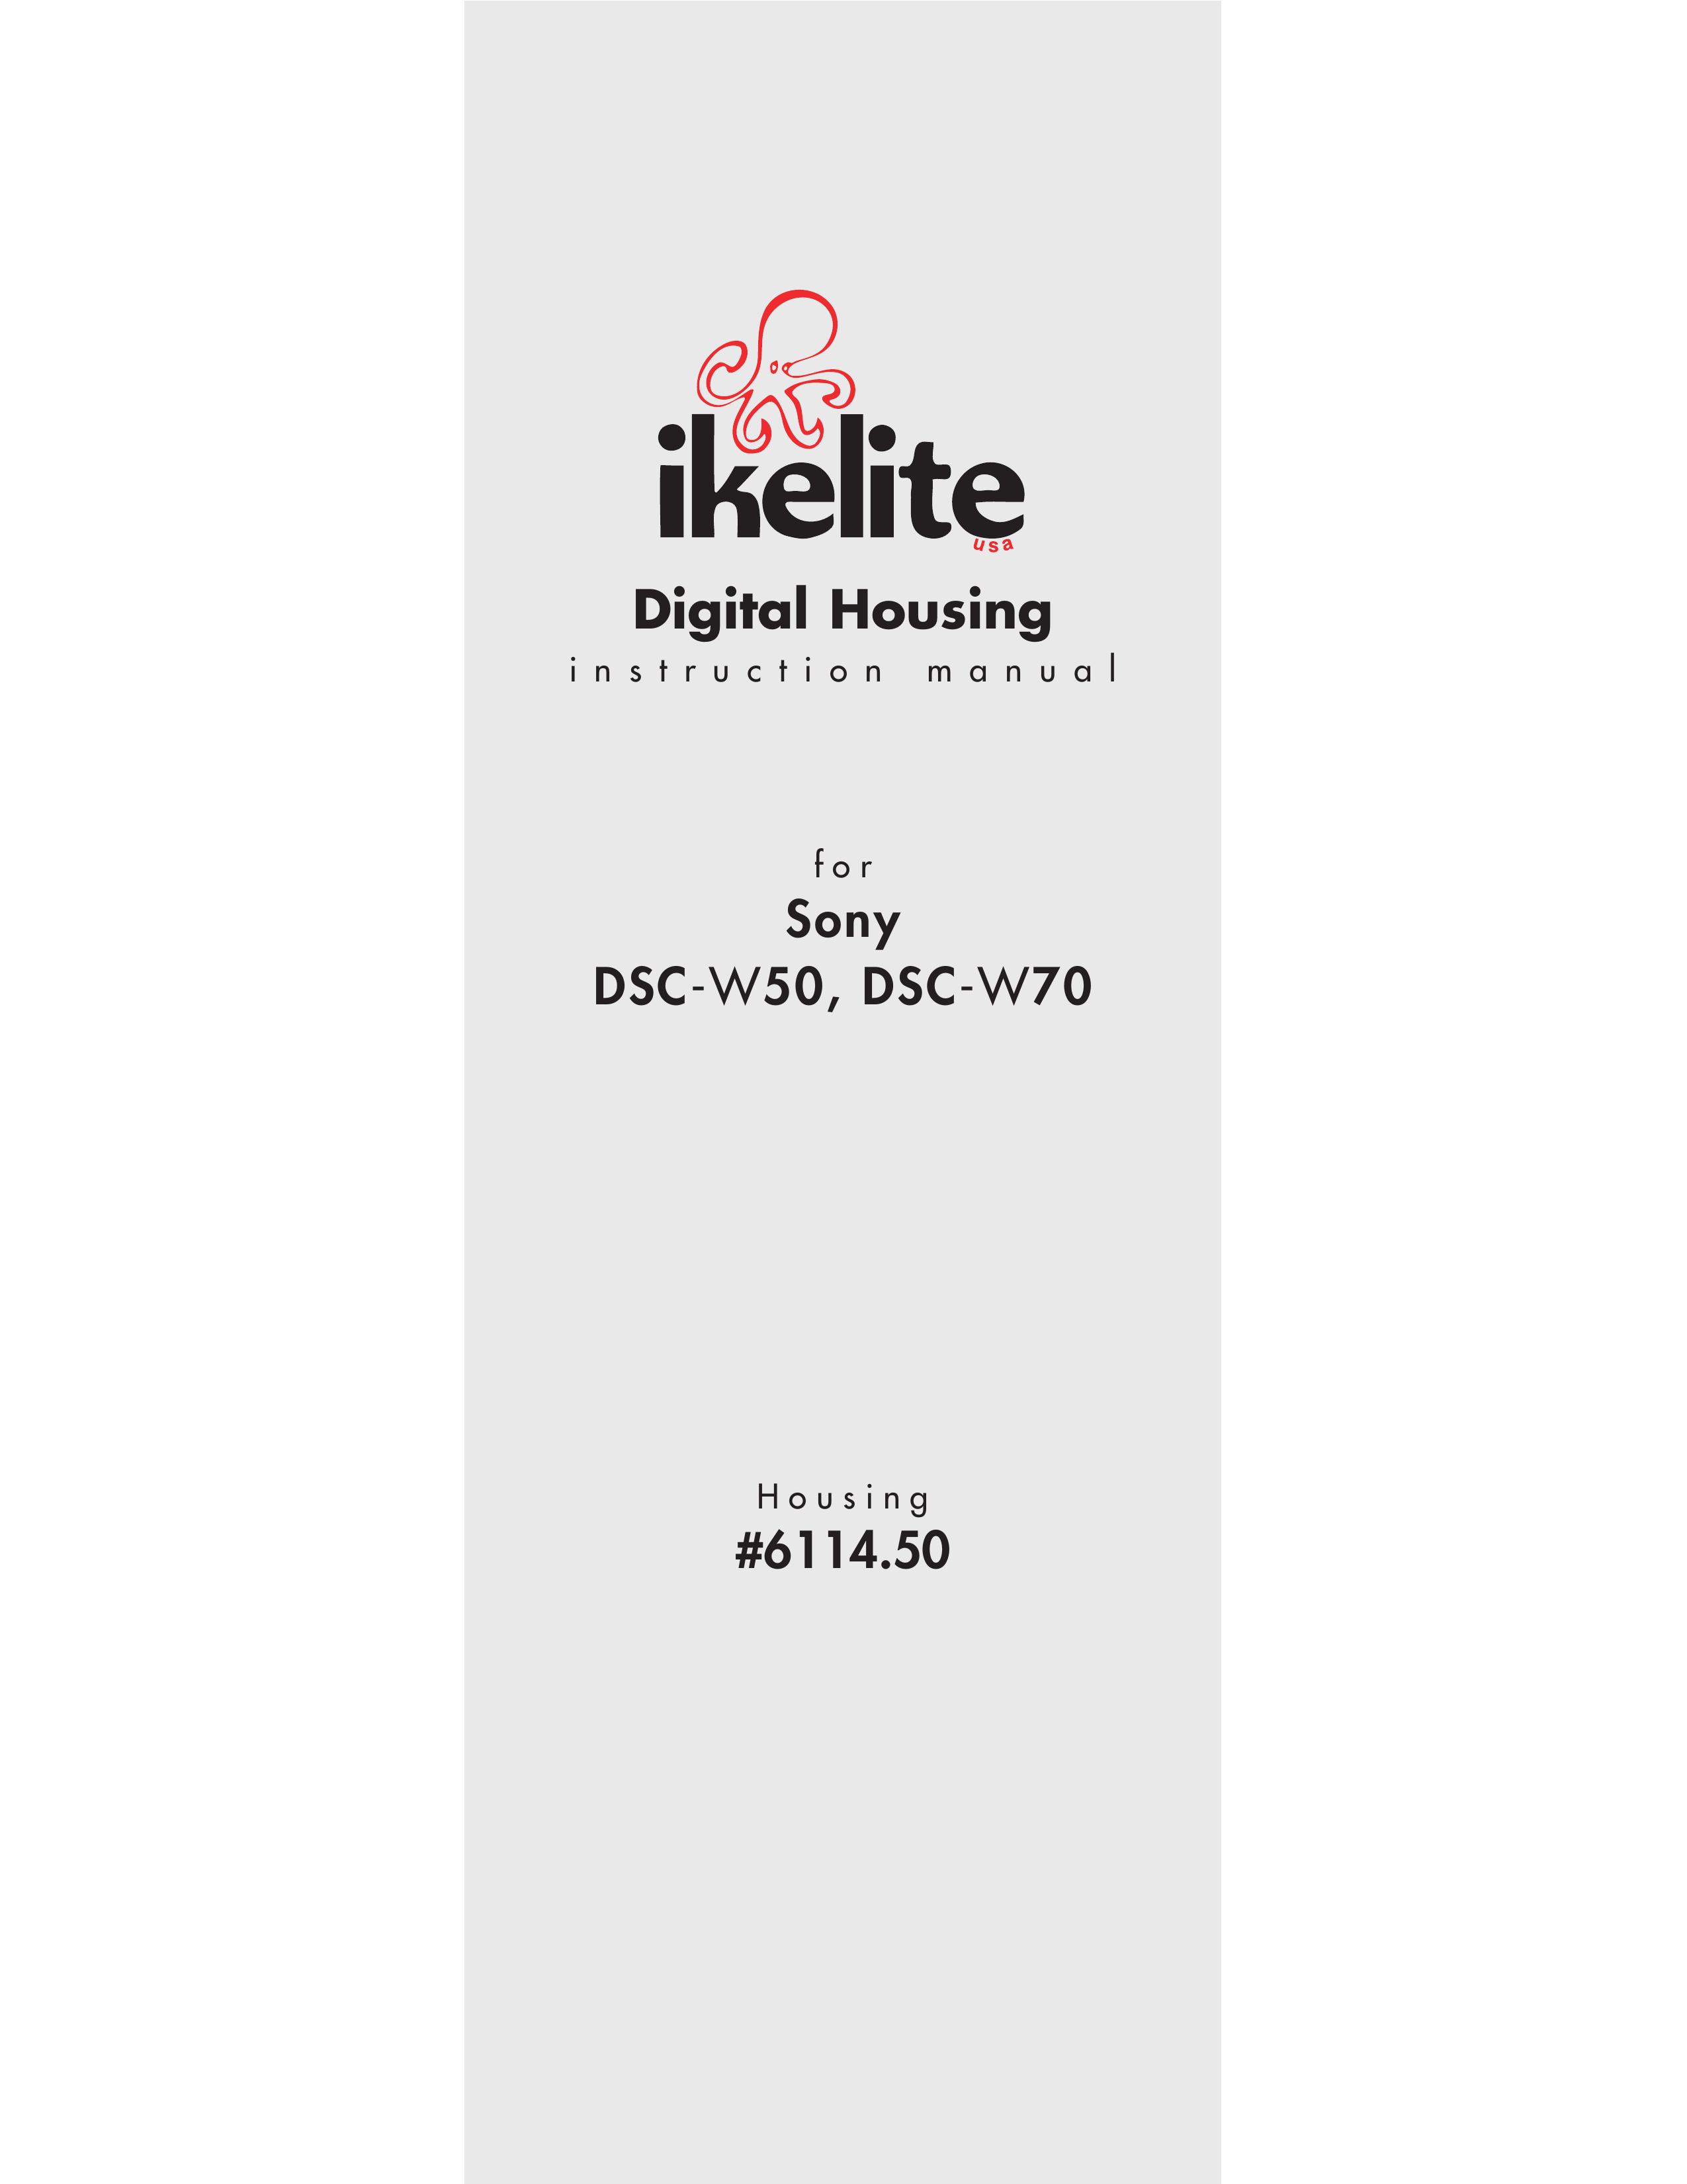 Ikelite DSC-W50 Digital Camera User Manual